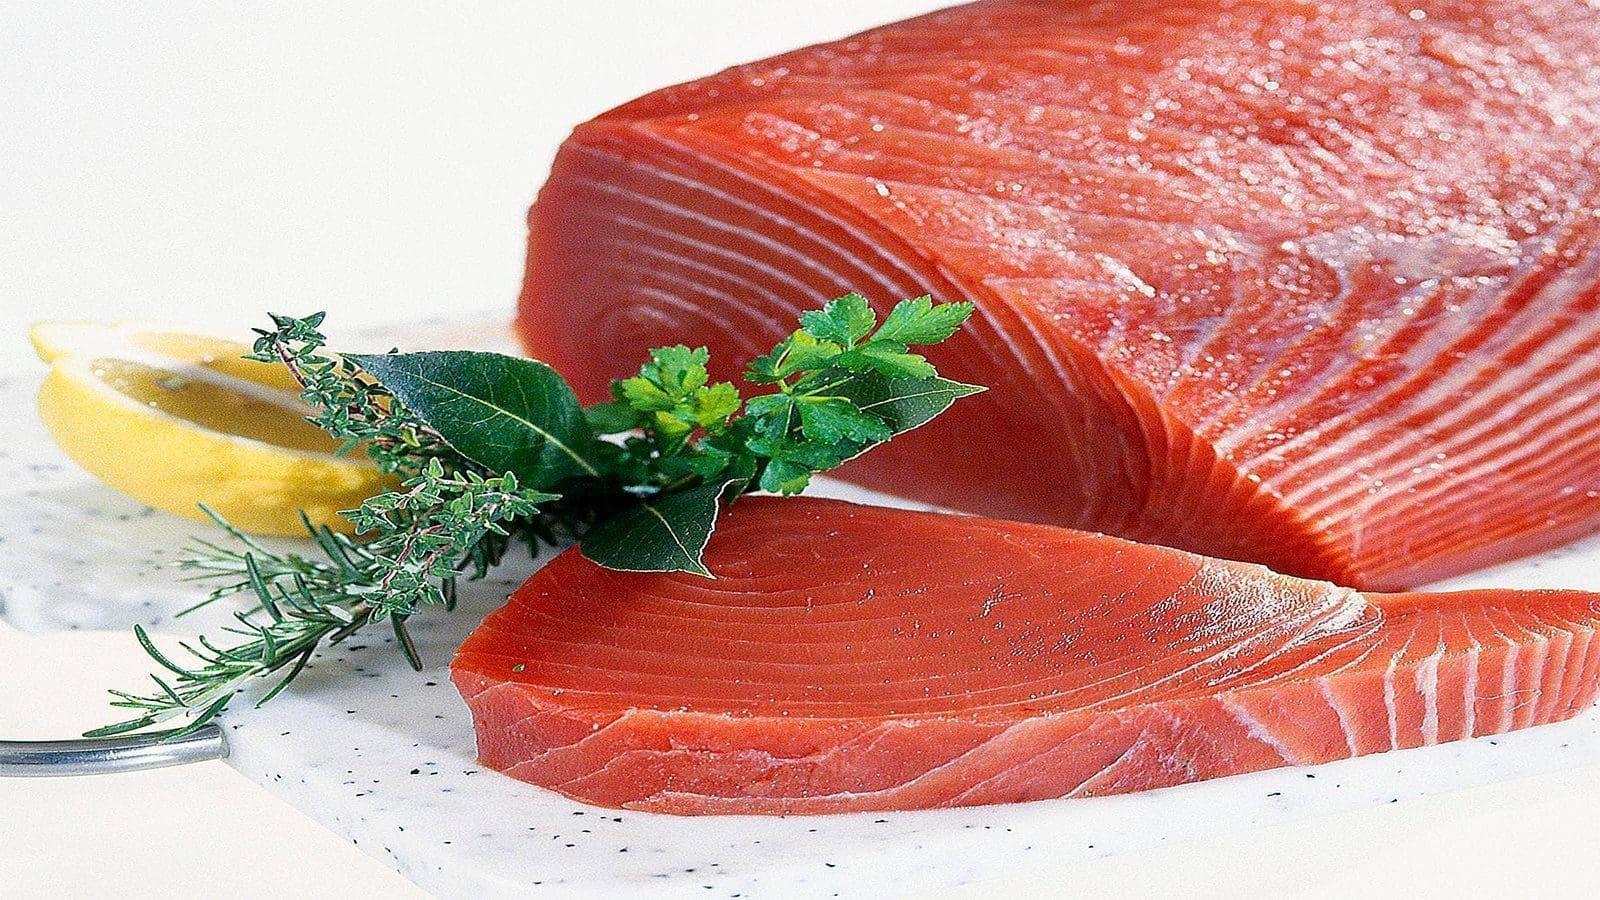 European Commission addresses tuna fraud, sets limits for additives